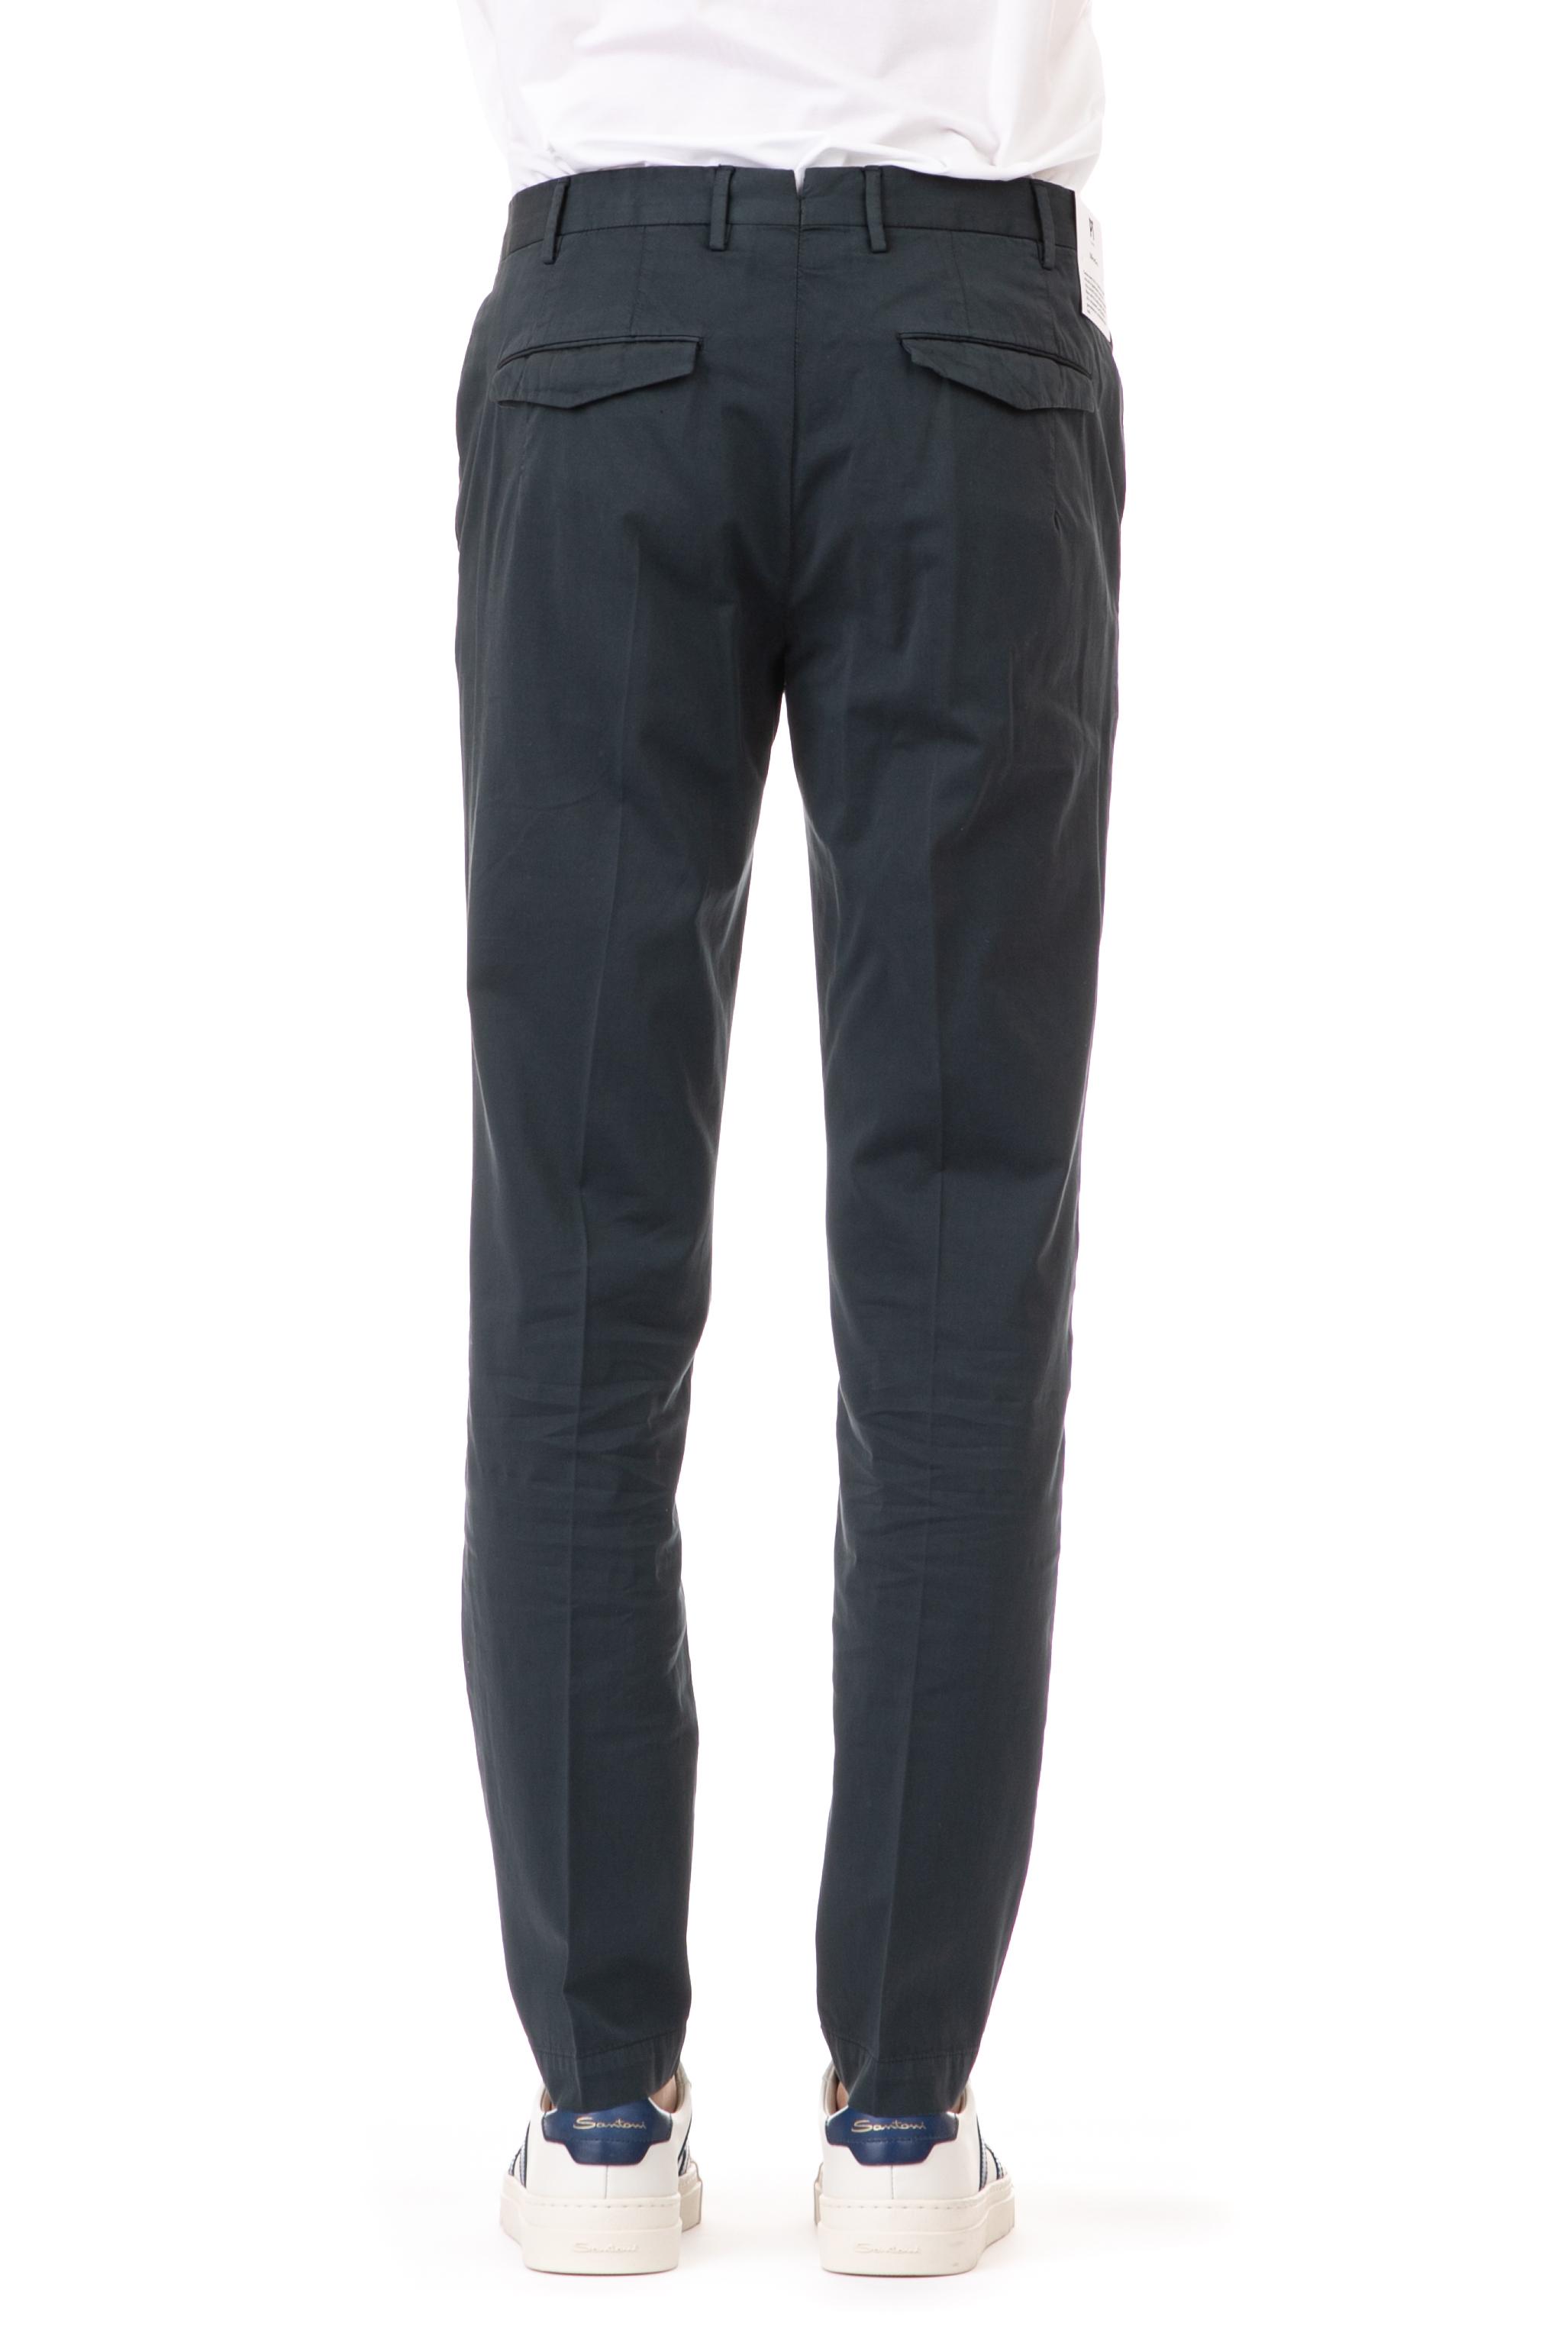 Pt torino Cotton-silk pants master fit, trousers, Blue - Il Setaccio